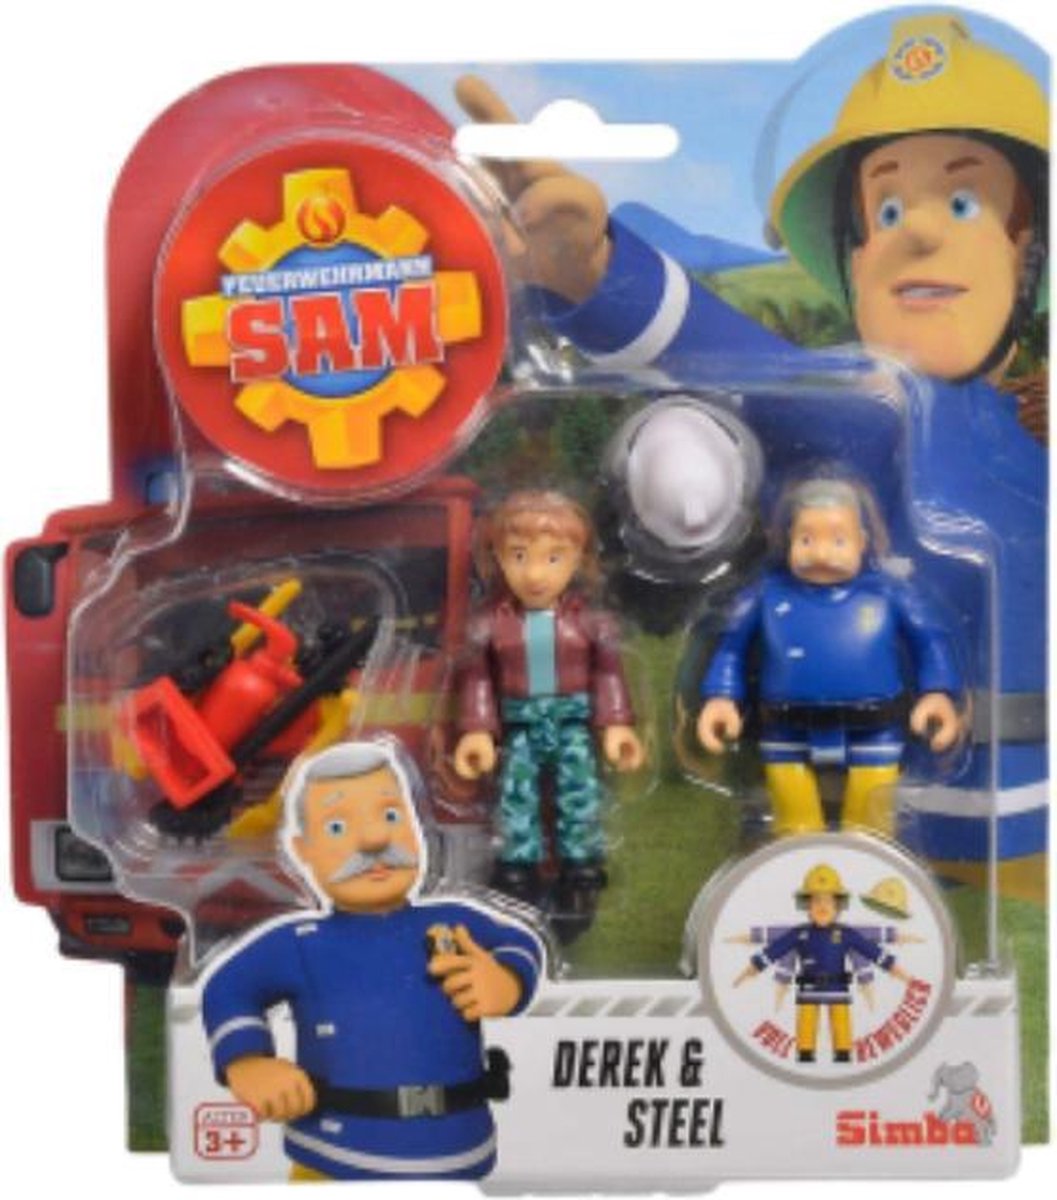 Brandweerman Sam speelfiguren - Derek & Steele | bol.com